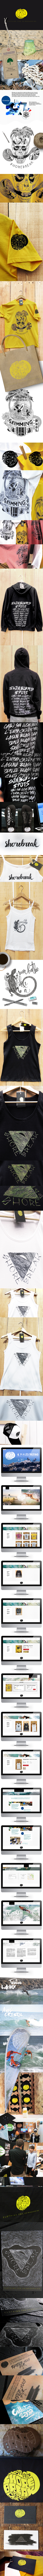 design textil Design textile tee-shirts Surf skimboard brand branding  e-artsup